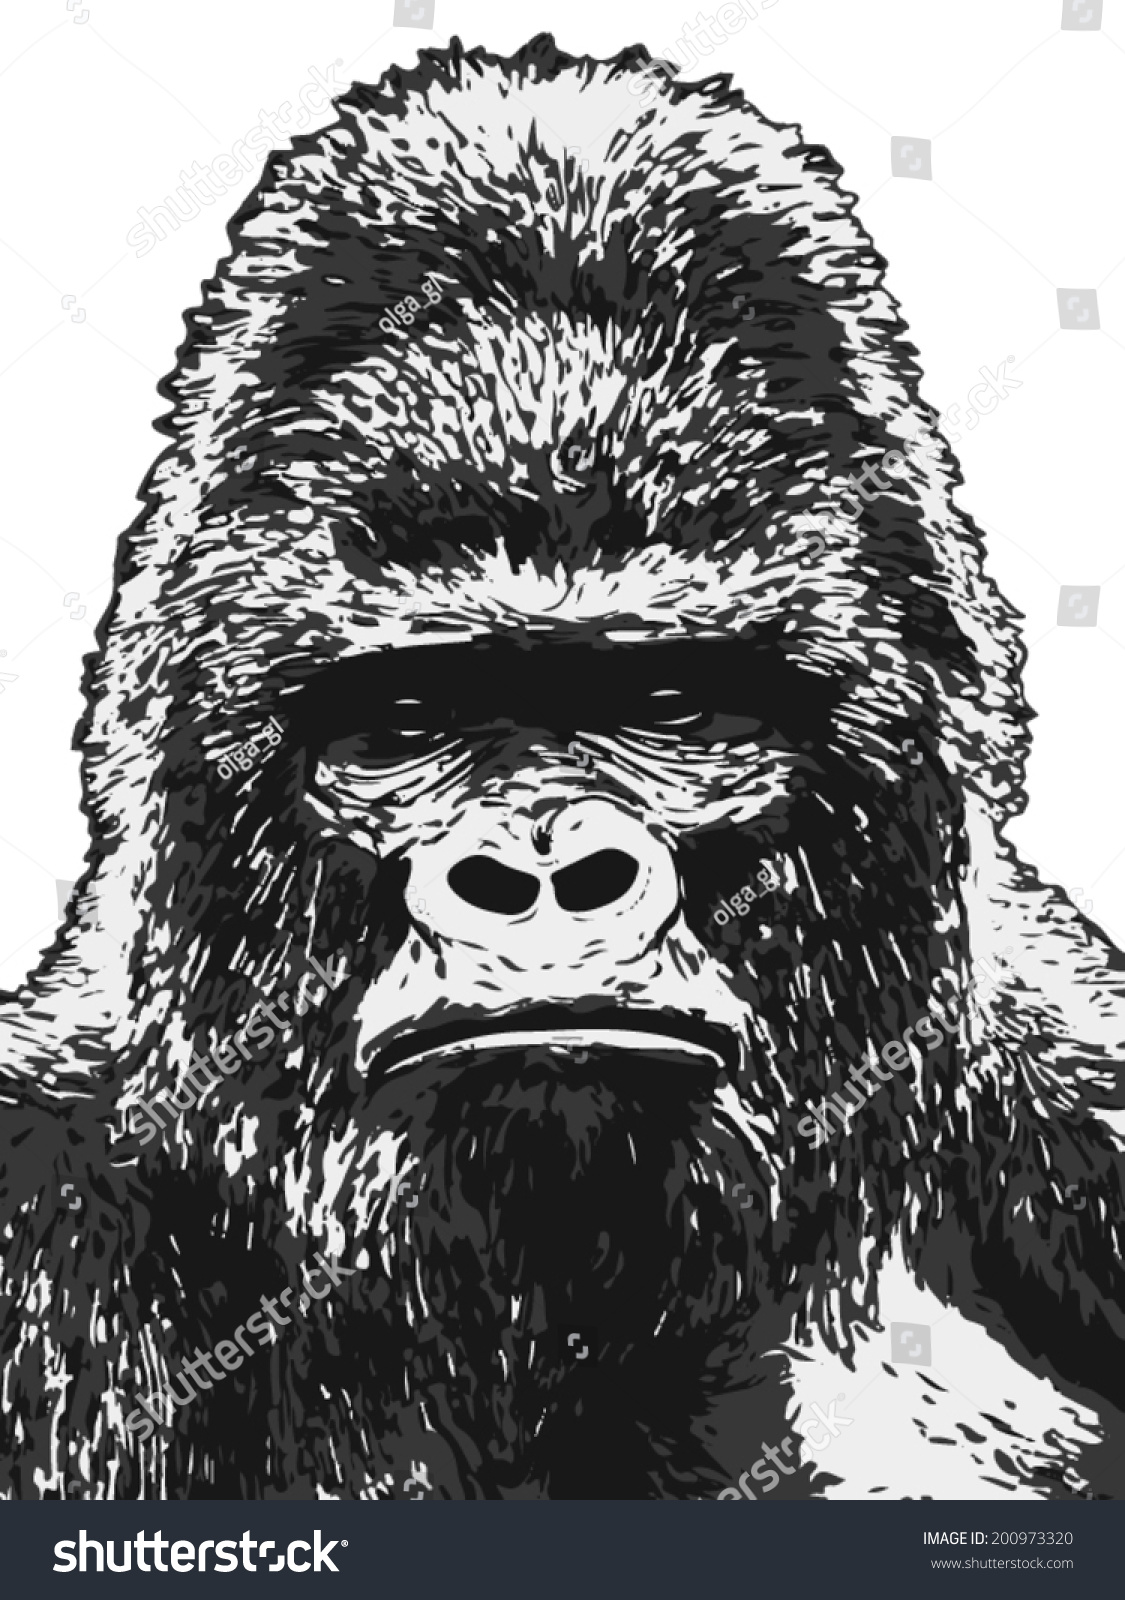 Black White Closeup Sketch Portrait Gorilla vector de stock libre de regalías